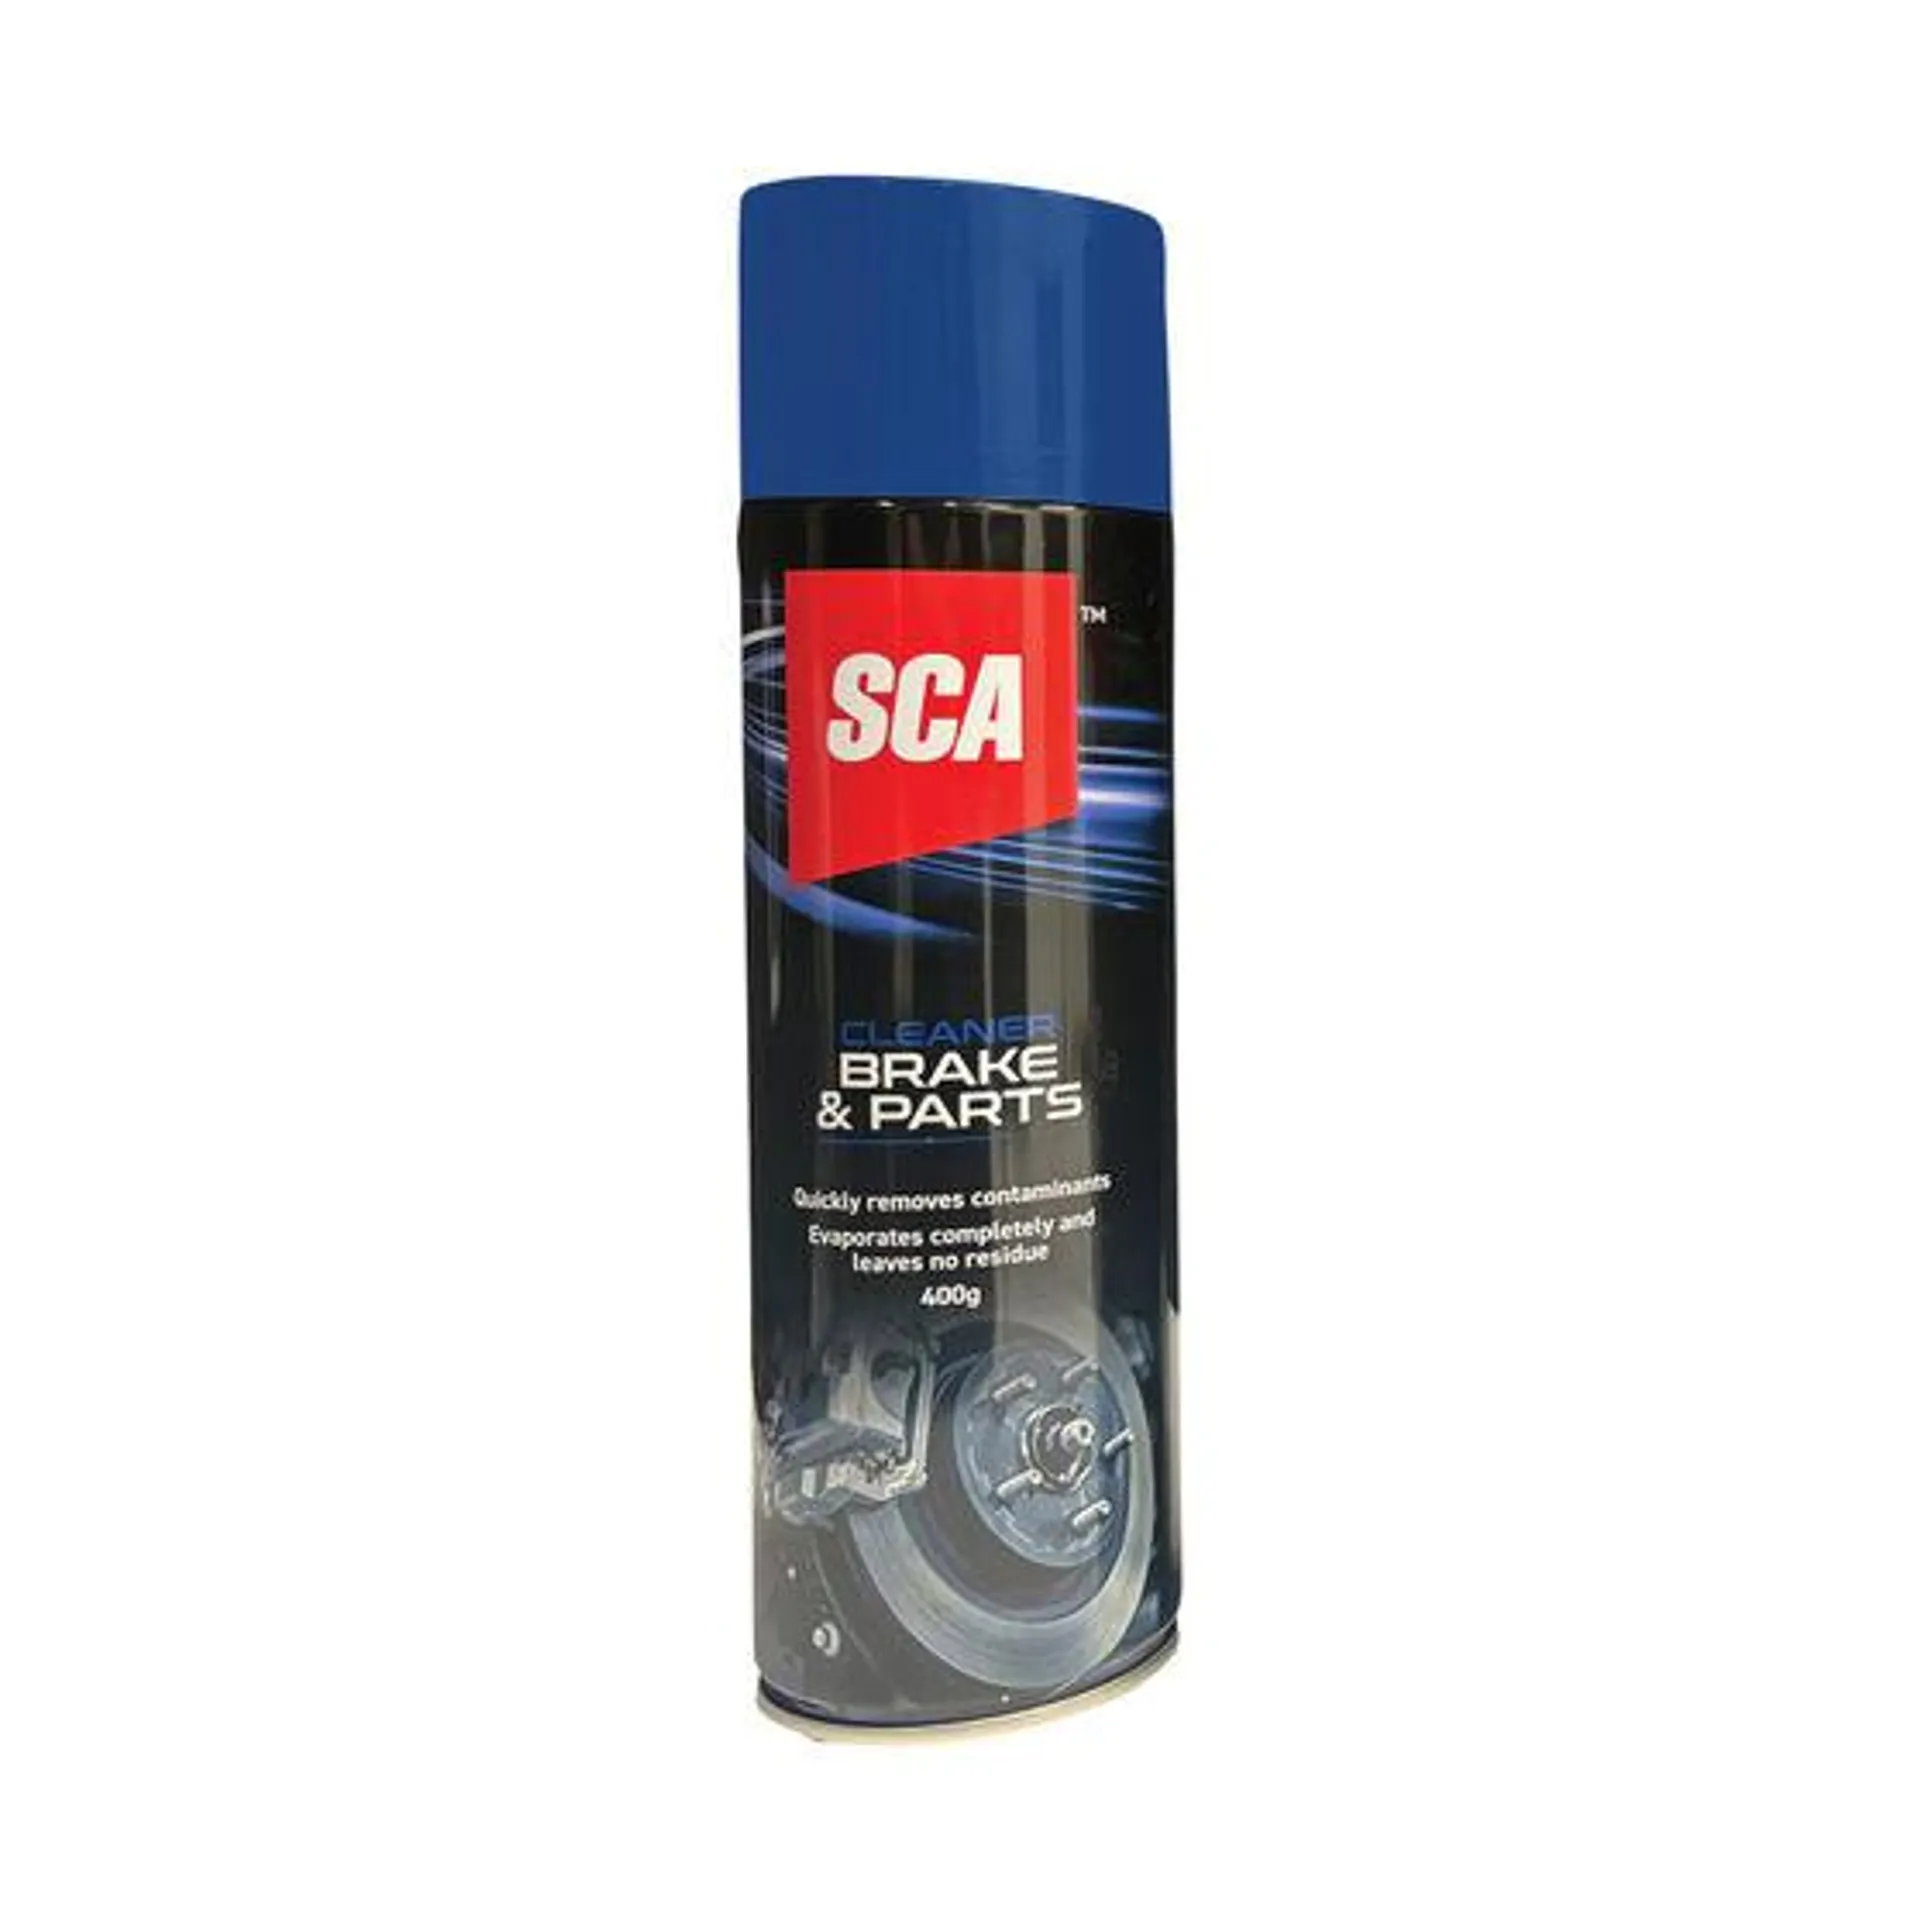 SCA Brake & Parts Cleaner 400g